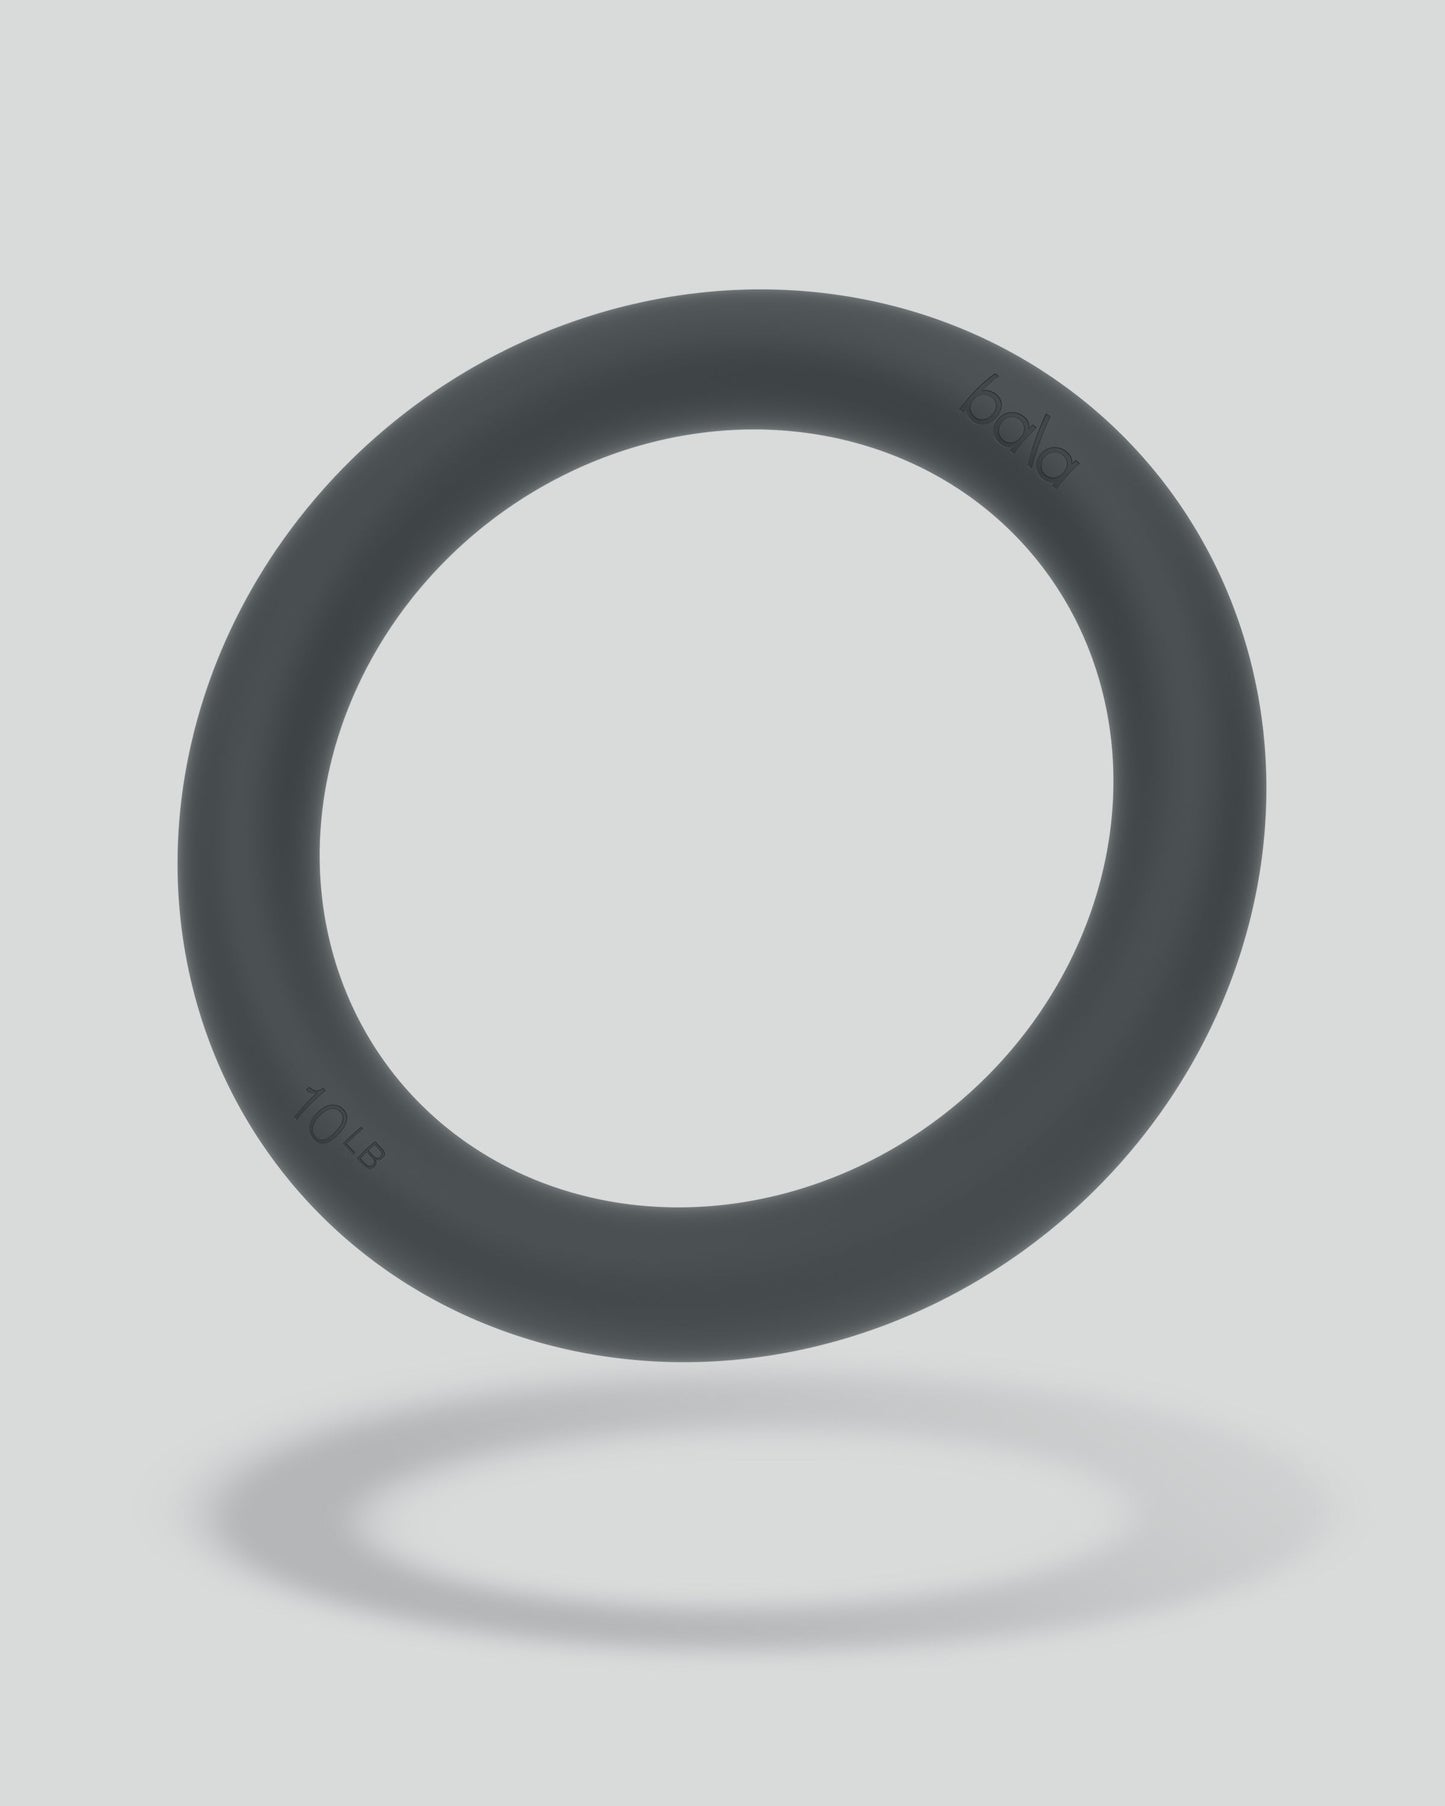 Bala: The Power Ring